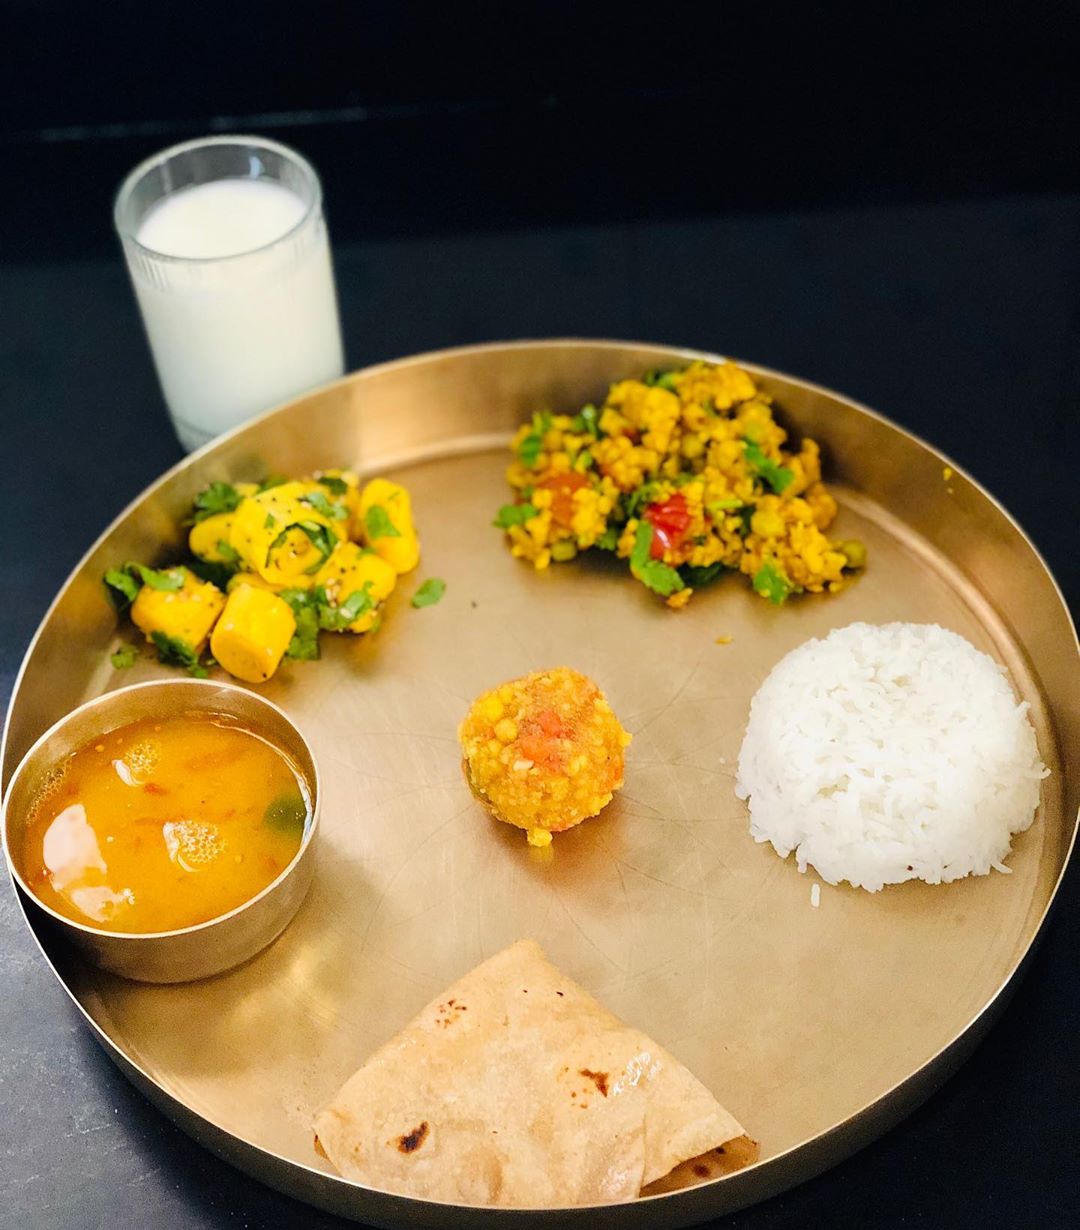 #navmiprasad 
Khandvi
Roti
Rice
Dal
Bundi ladoo 
Sabji 
Buttermilk 
Lunch for today 
#kpmeal #lunchtime